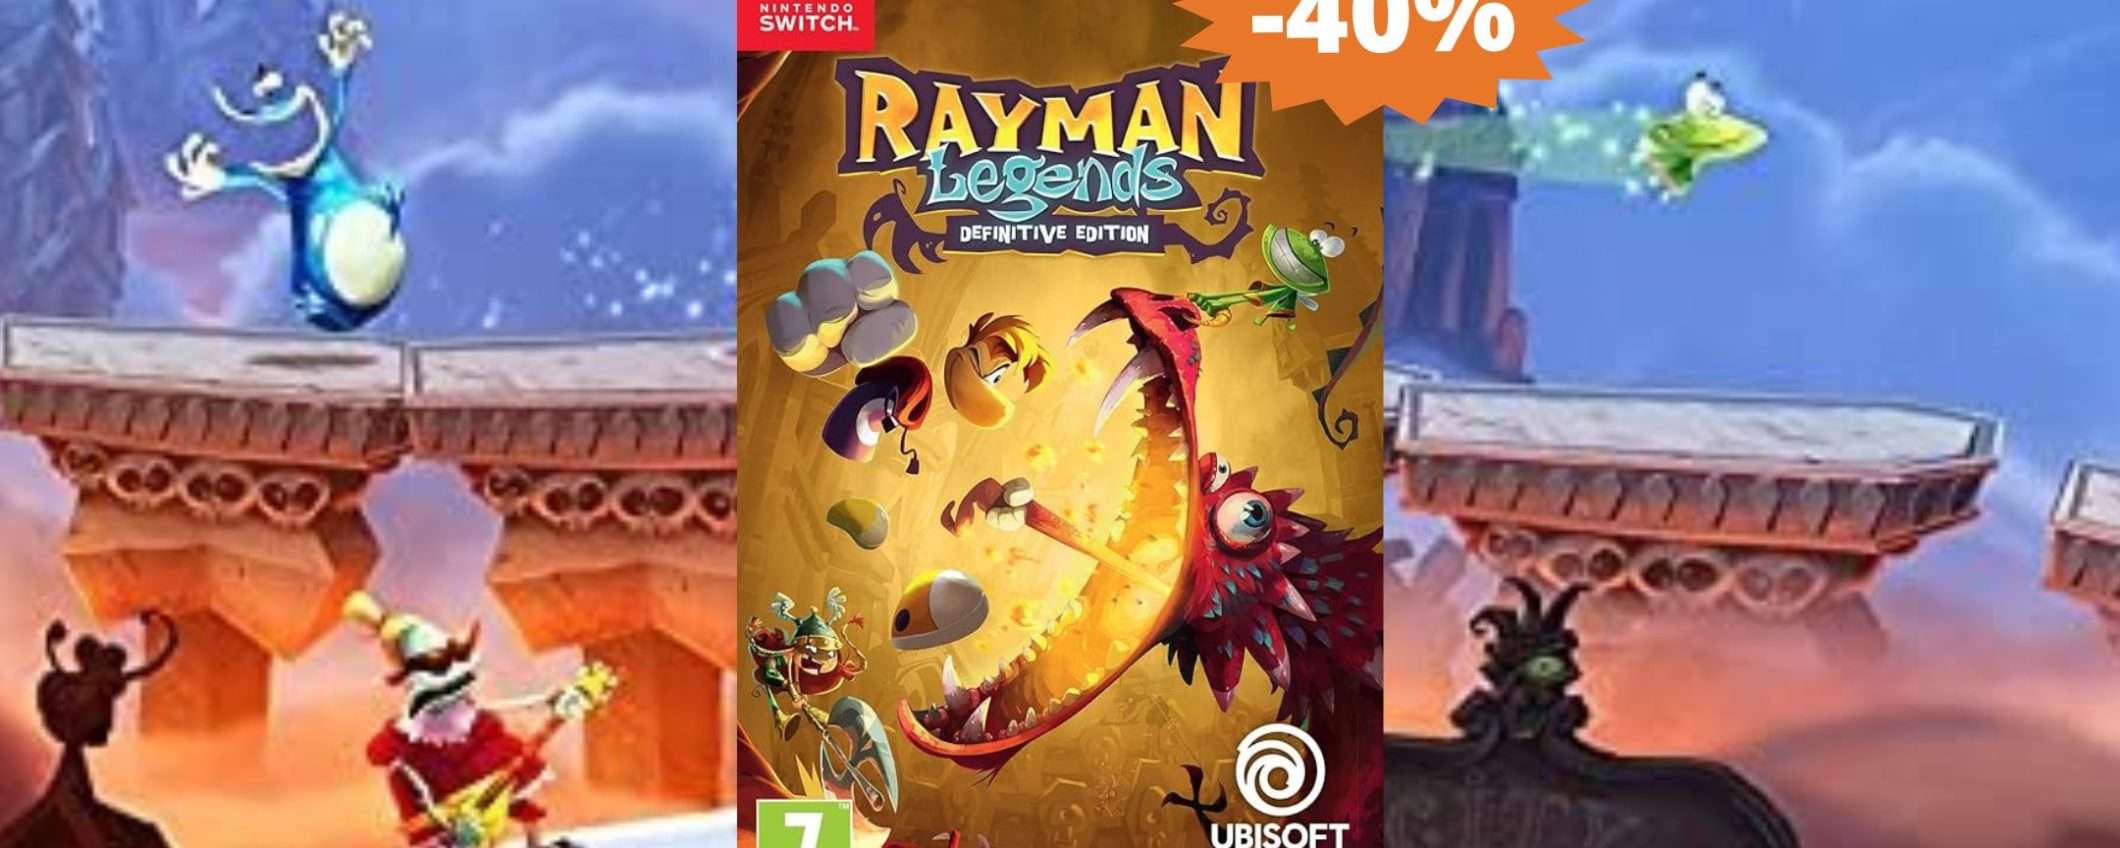 Rayman Legends Definitive Edition: sconto EPICO del 40%